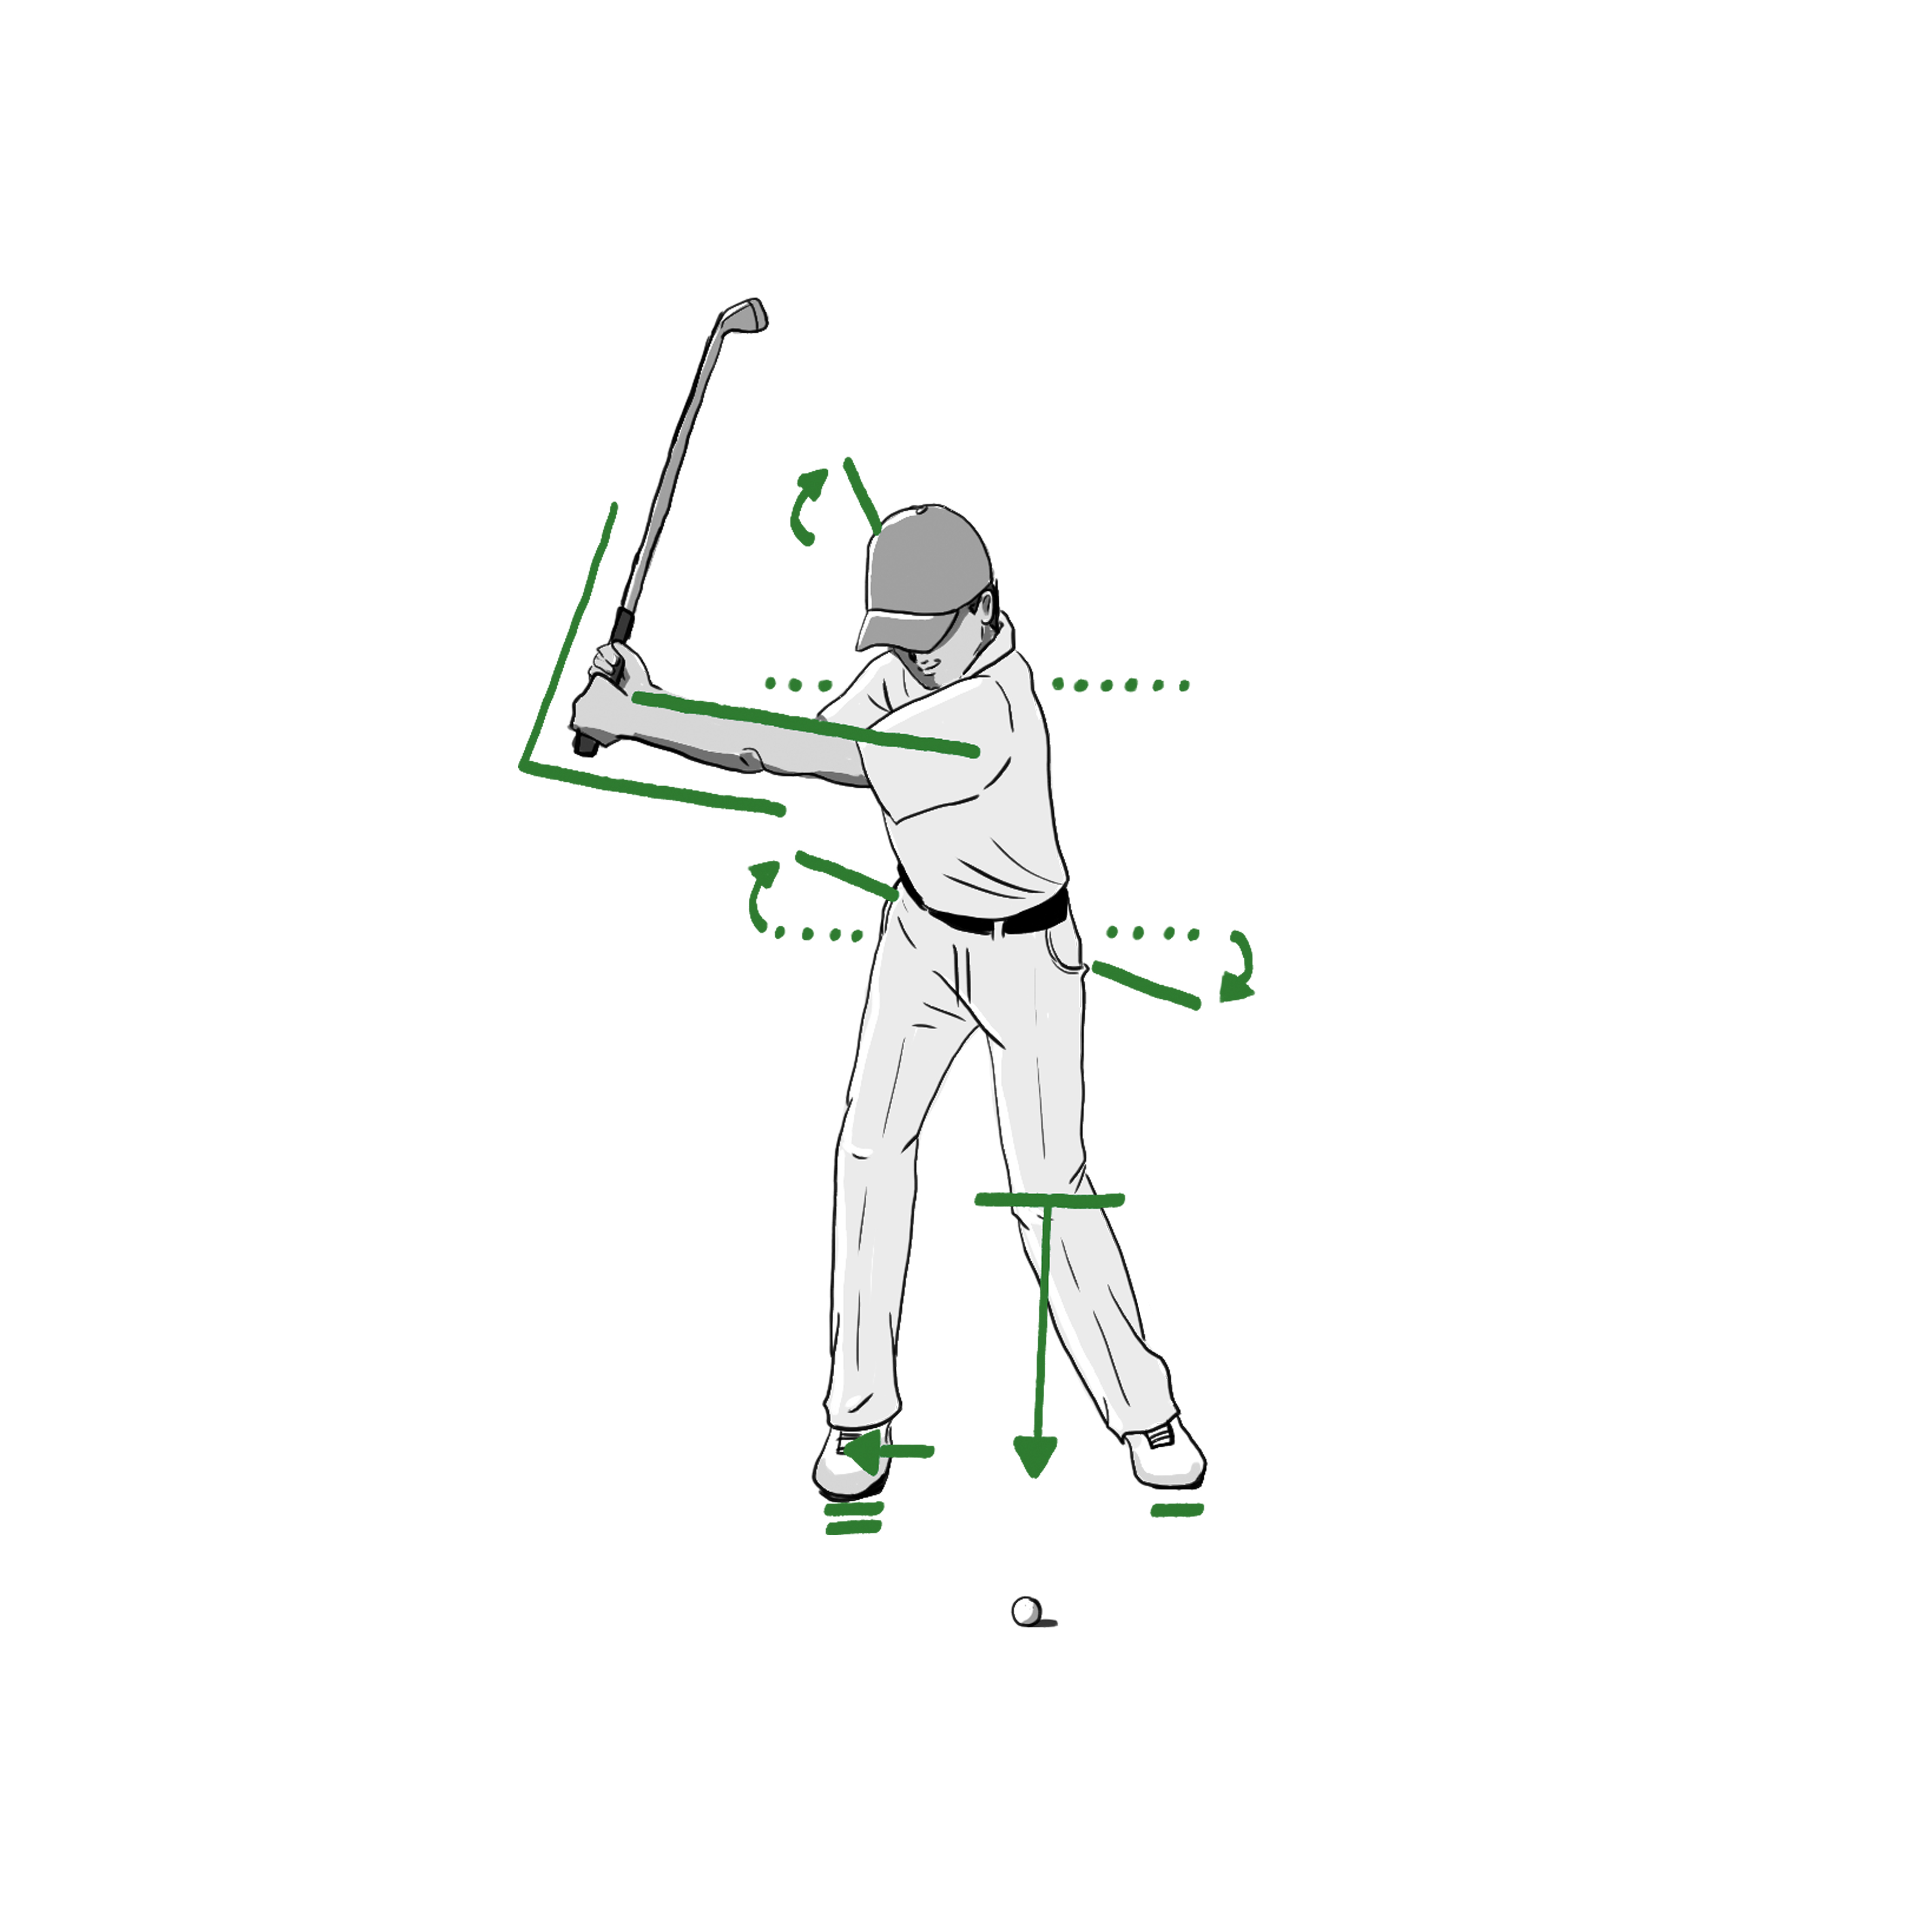 Golf Swing Mechanics - learn the basics during lockdown